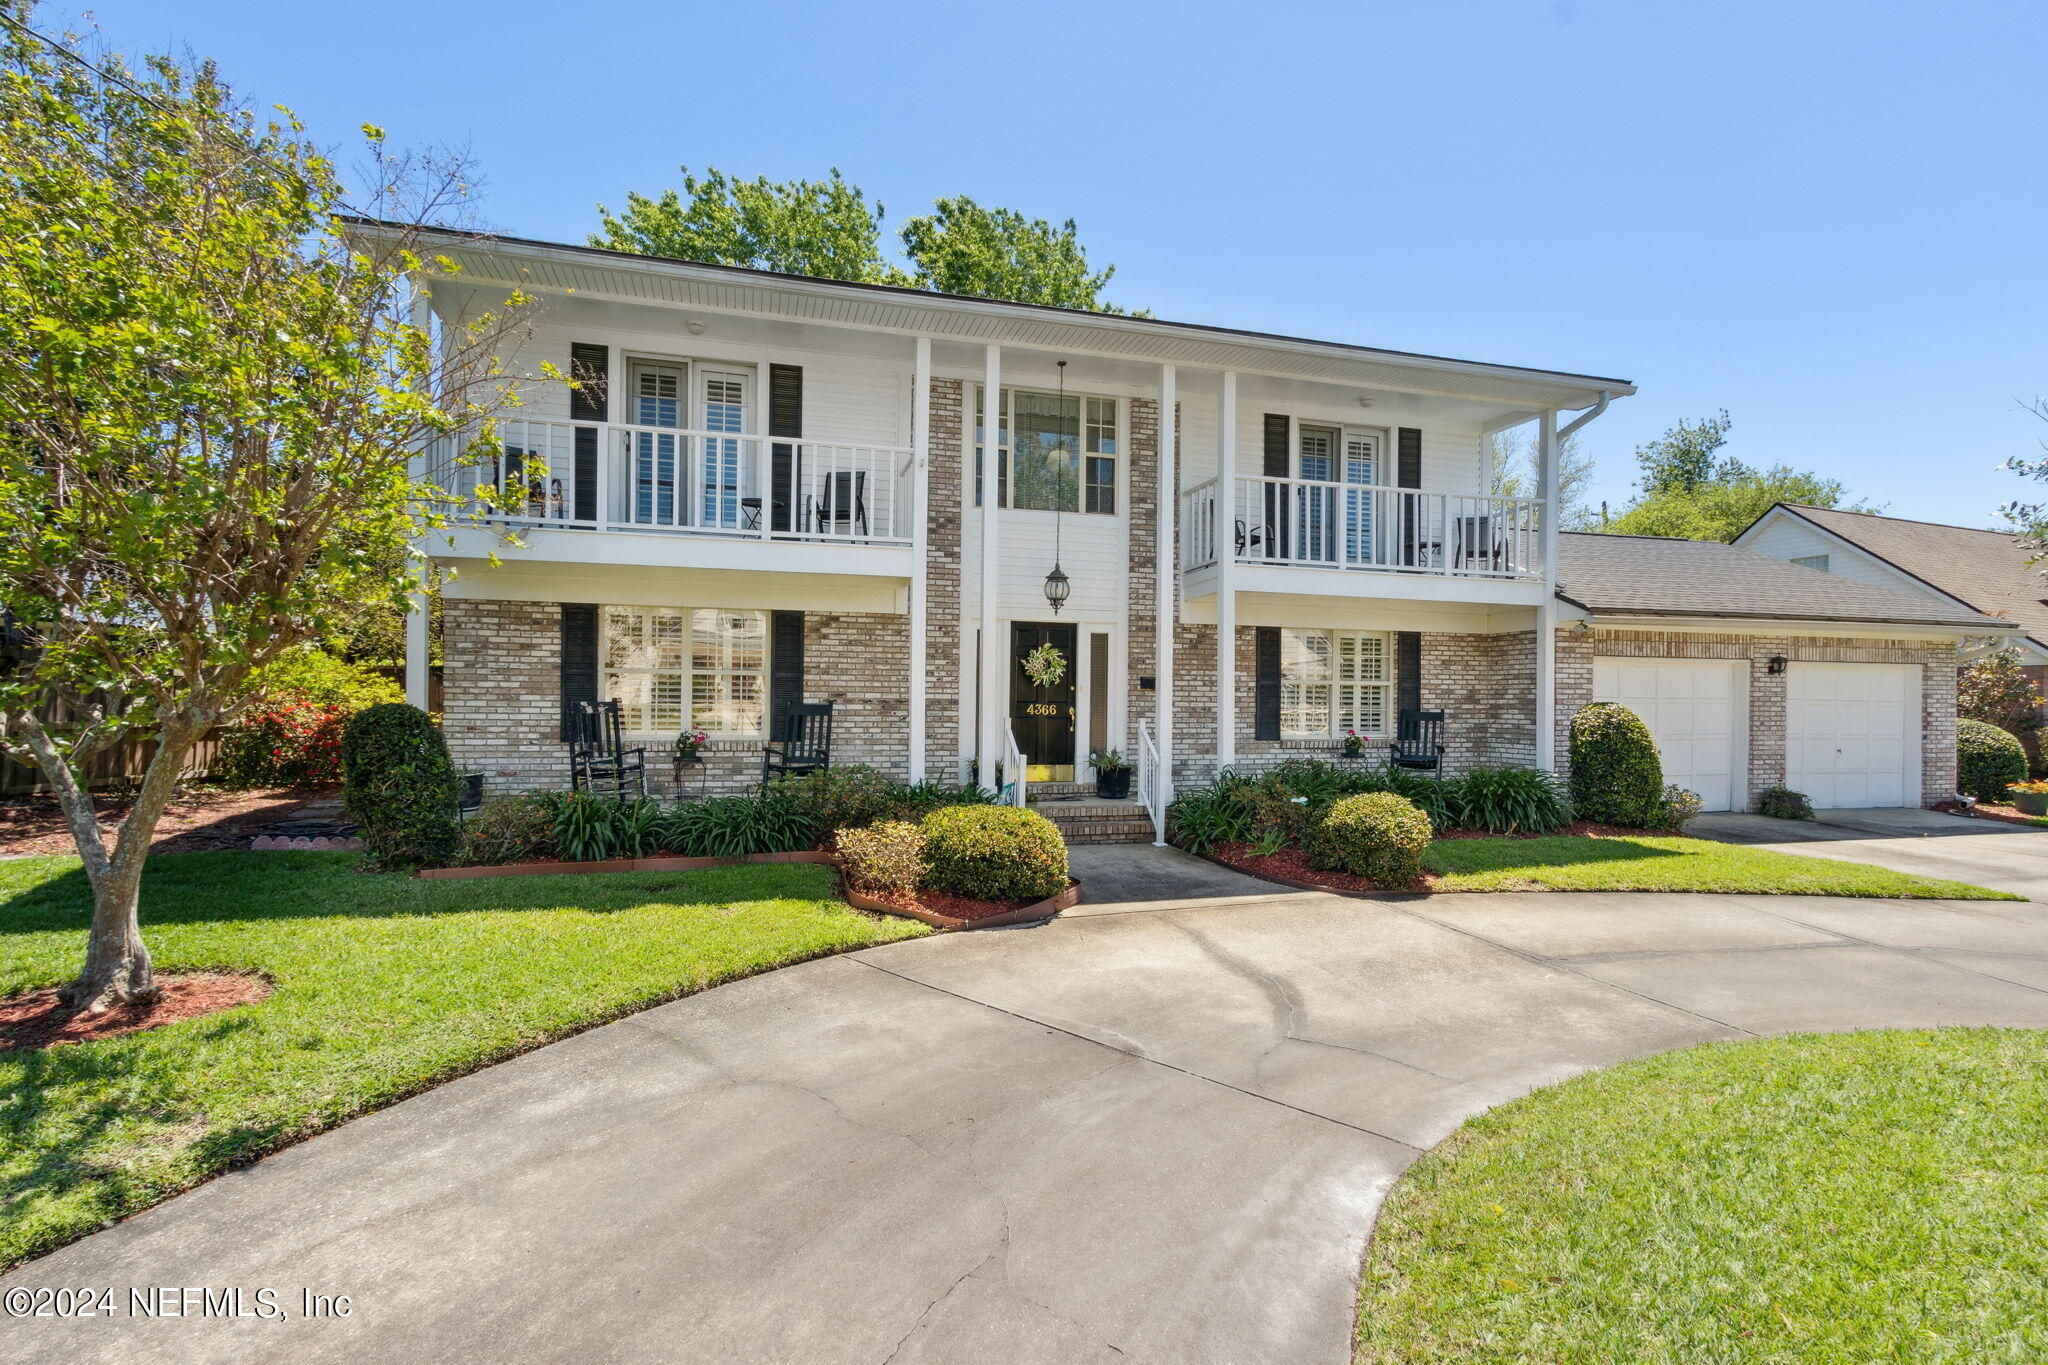 Jacksonville, FL home for sale located at 4366 Venetia Boulevard, Jacksonville, FL 32210